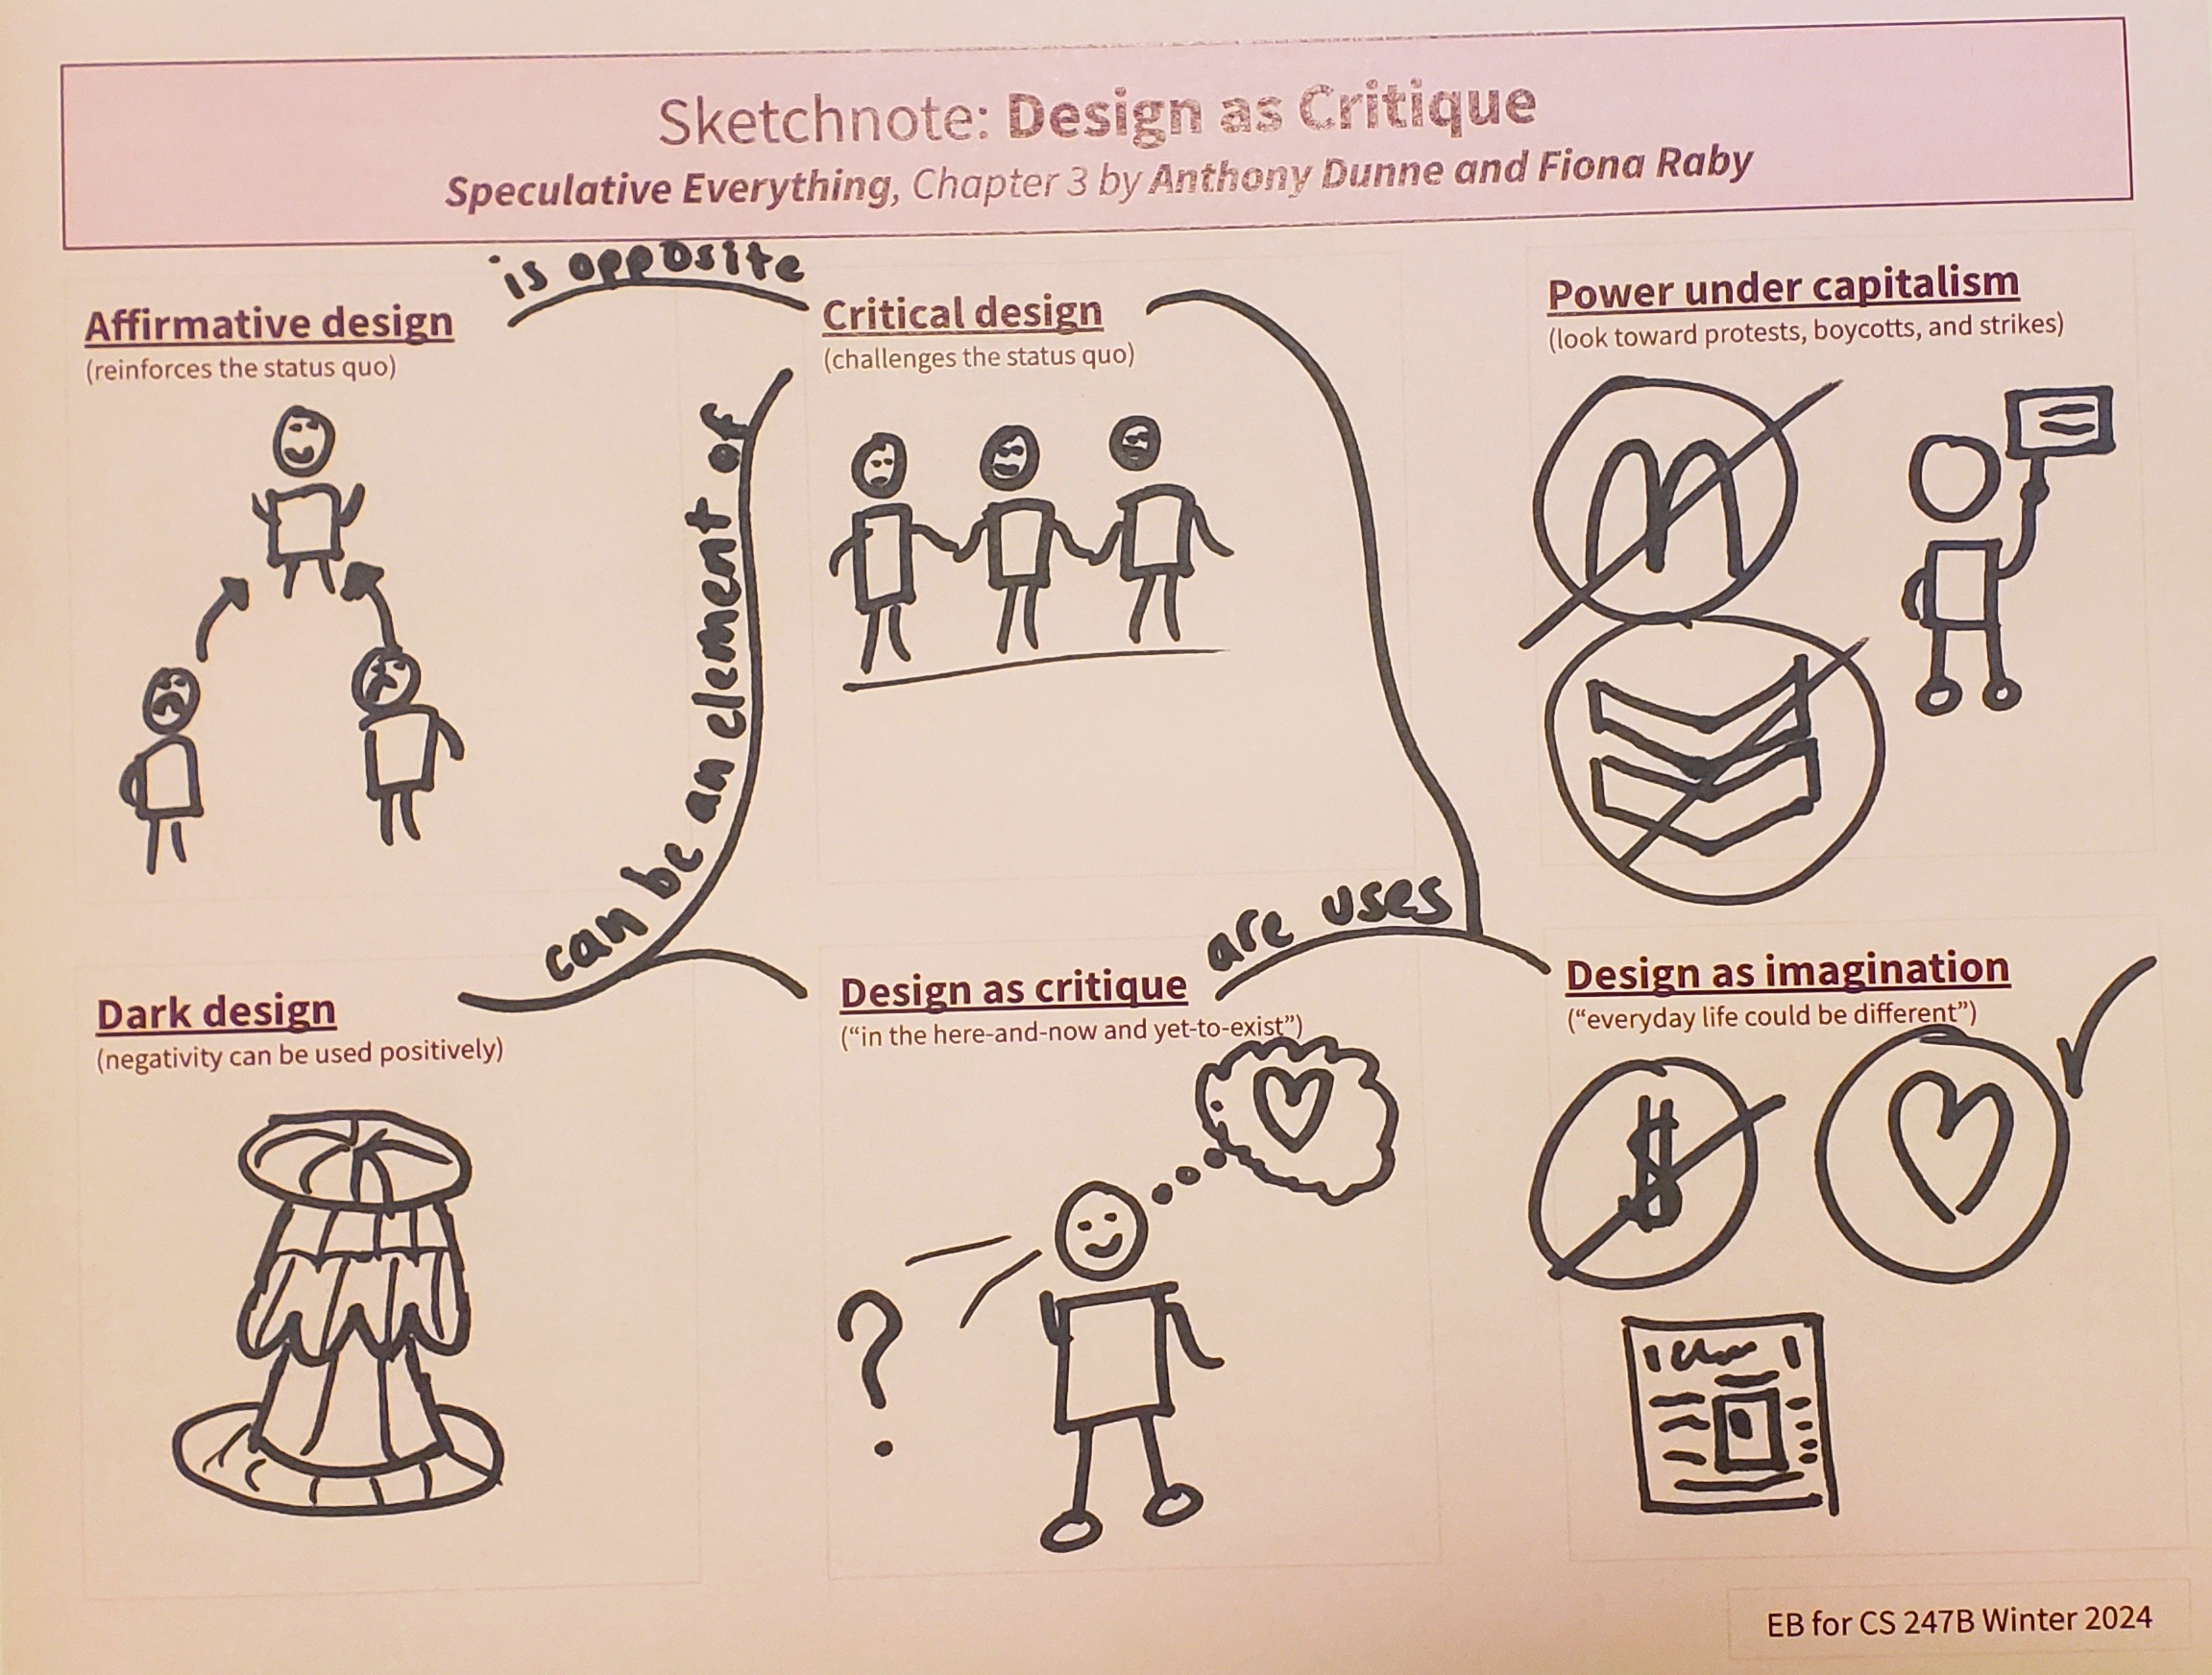 EB's sketchnote for Design as Critique. It focuses on affirmative design vs critical design, power under capitalism, dark design, and design as critique and imagination.